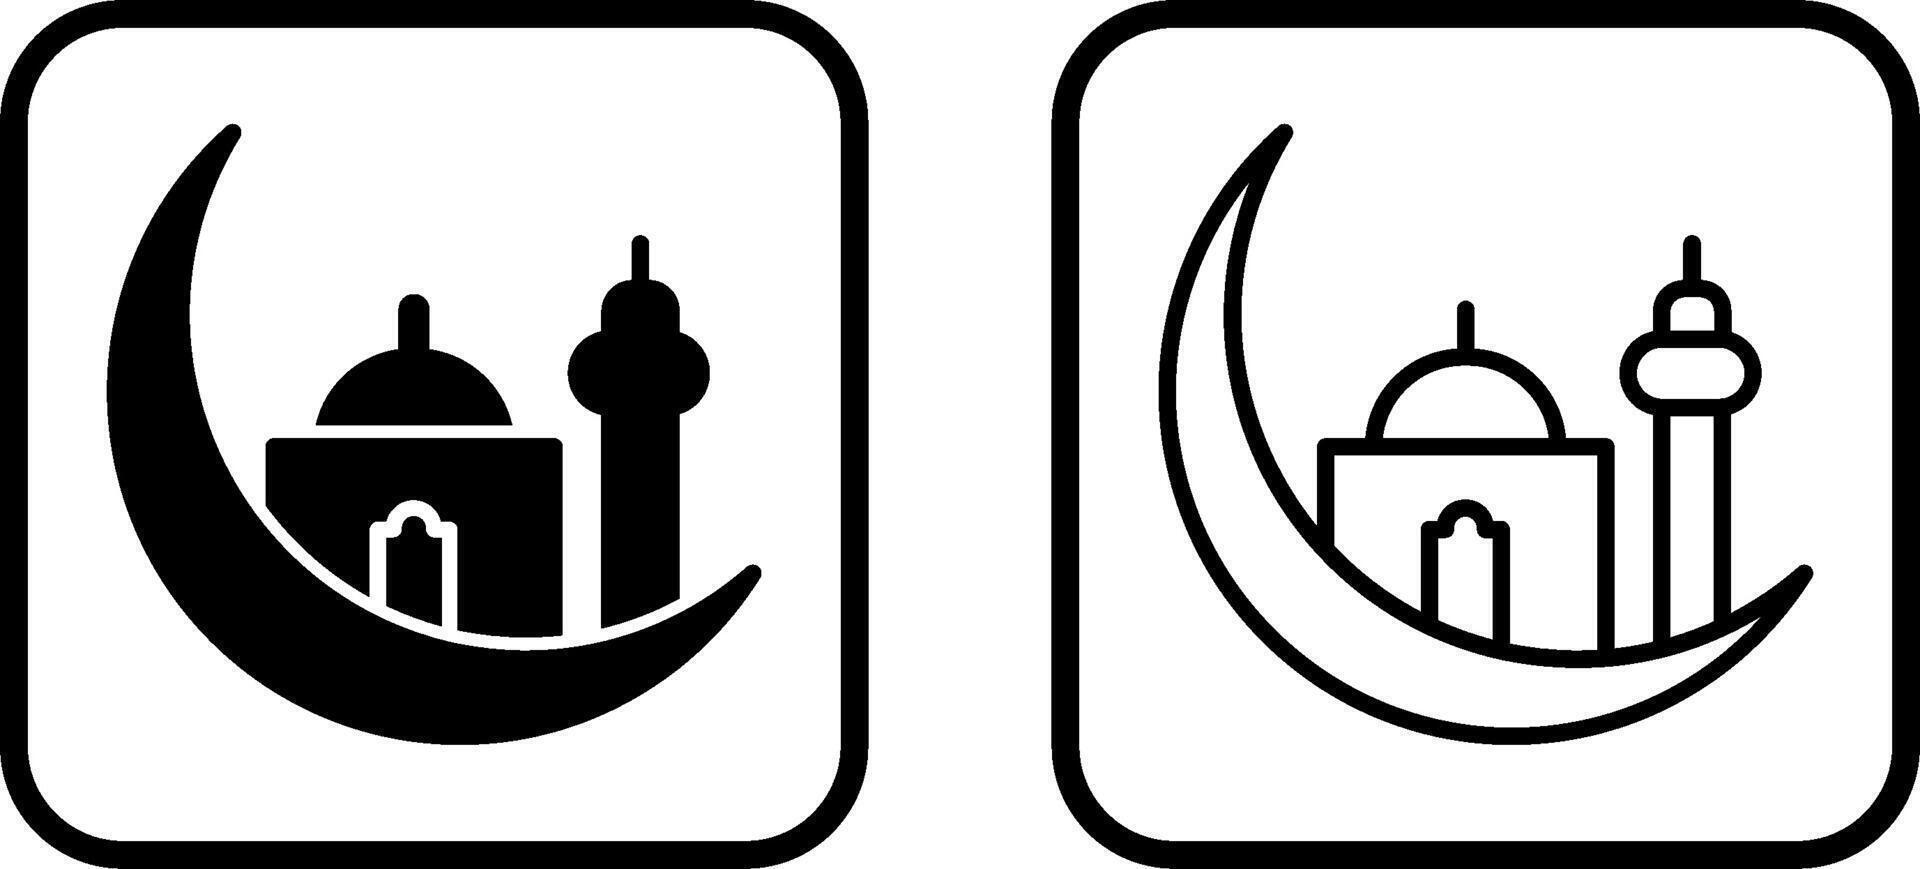 Islamic Star Vector Icon